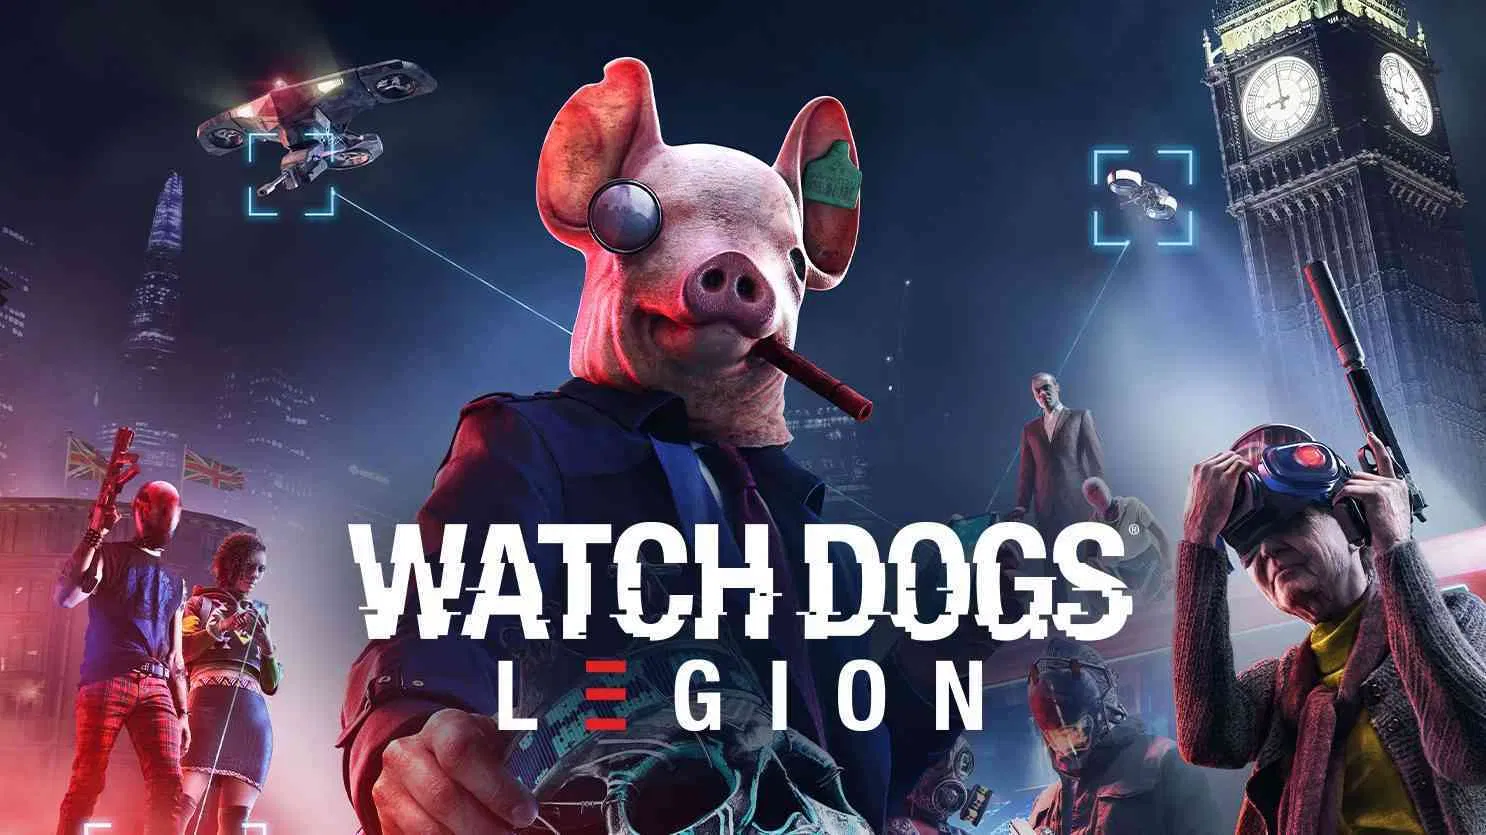 Watch dogs legion: novas imagens vazadas do game | c4617717 cropped watch dogs legion logo 2020 | married games notícias | watch dogs legion